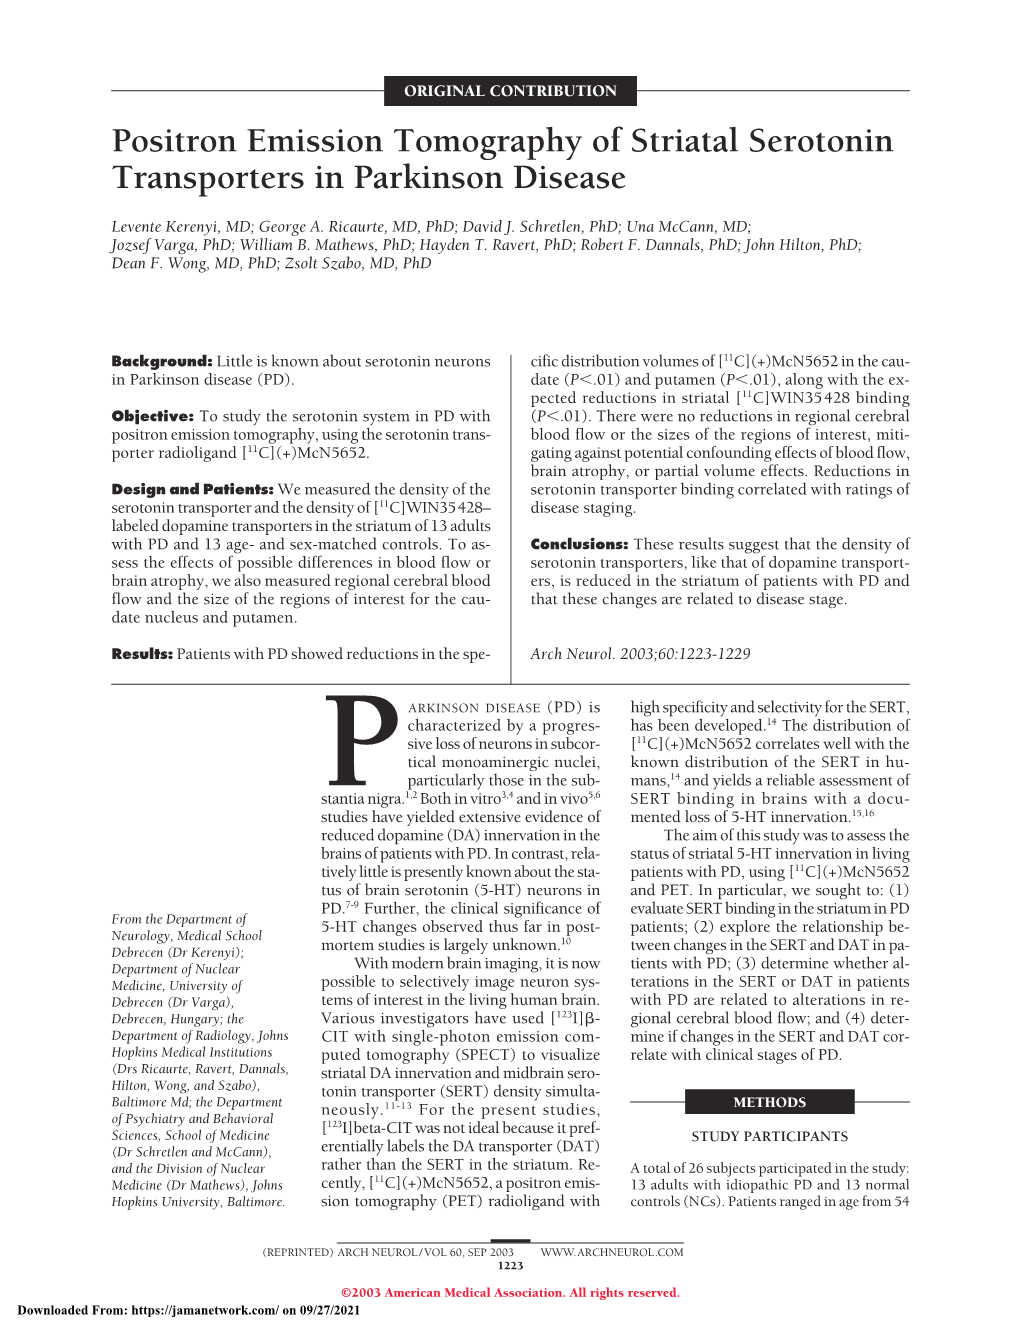 Positron Emission Tomography of Striatal Serotonin Transporters in Parkinson Disease